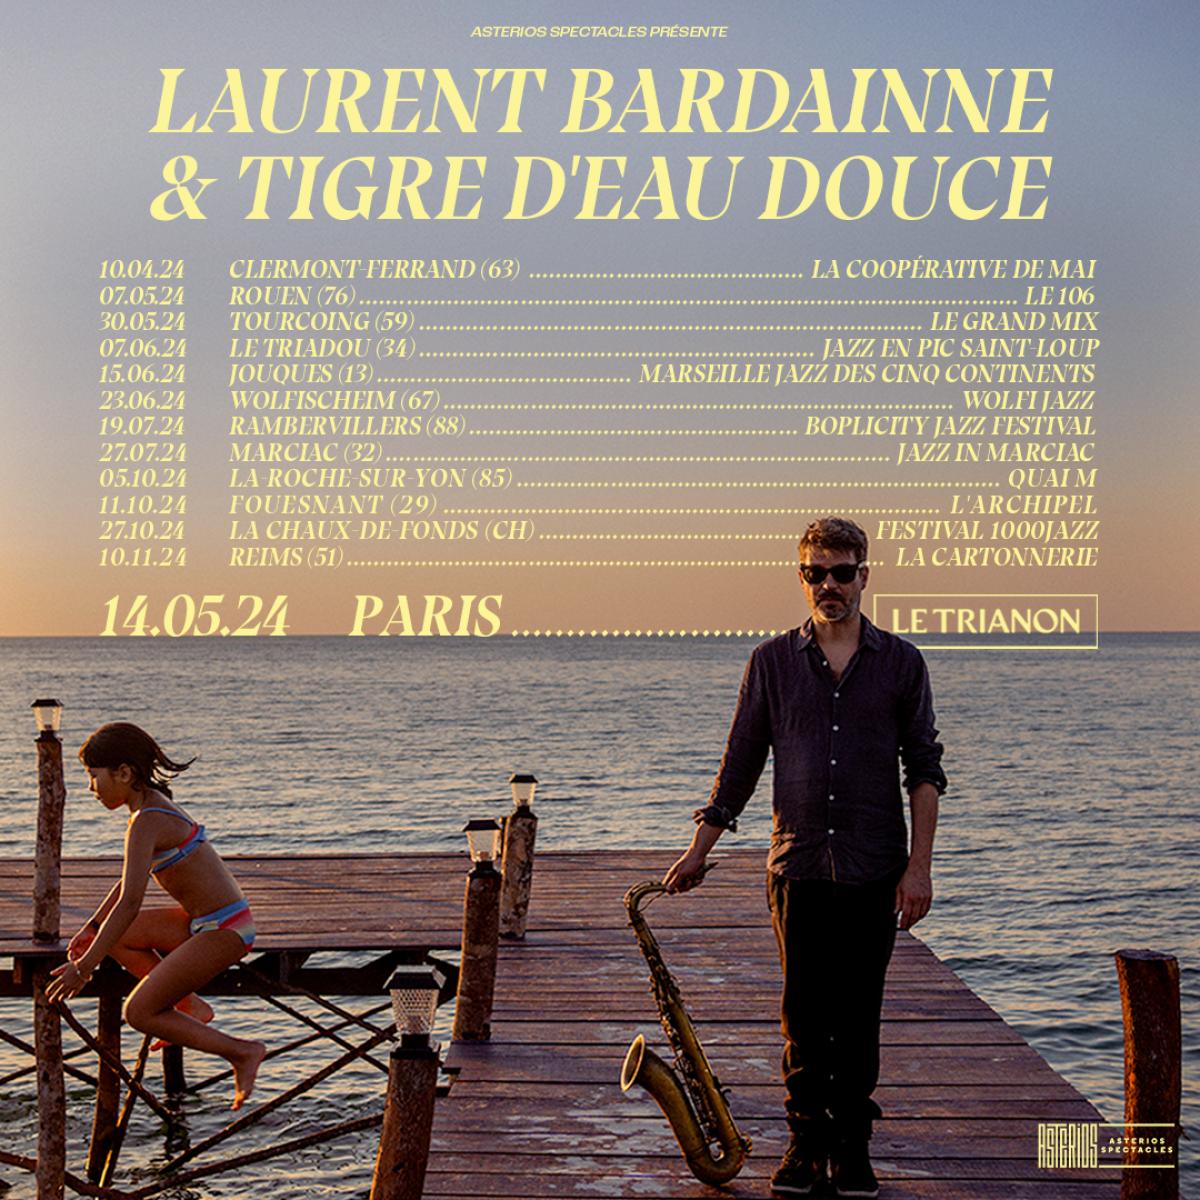 Laurent Bardainne - Tigre D'eau Douce at L'Astrada Tickets